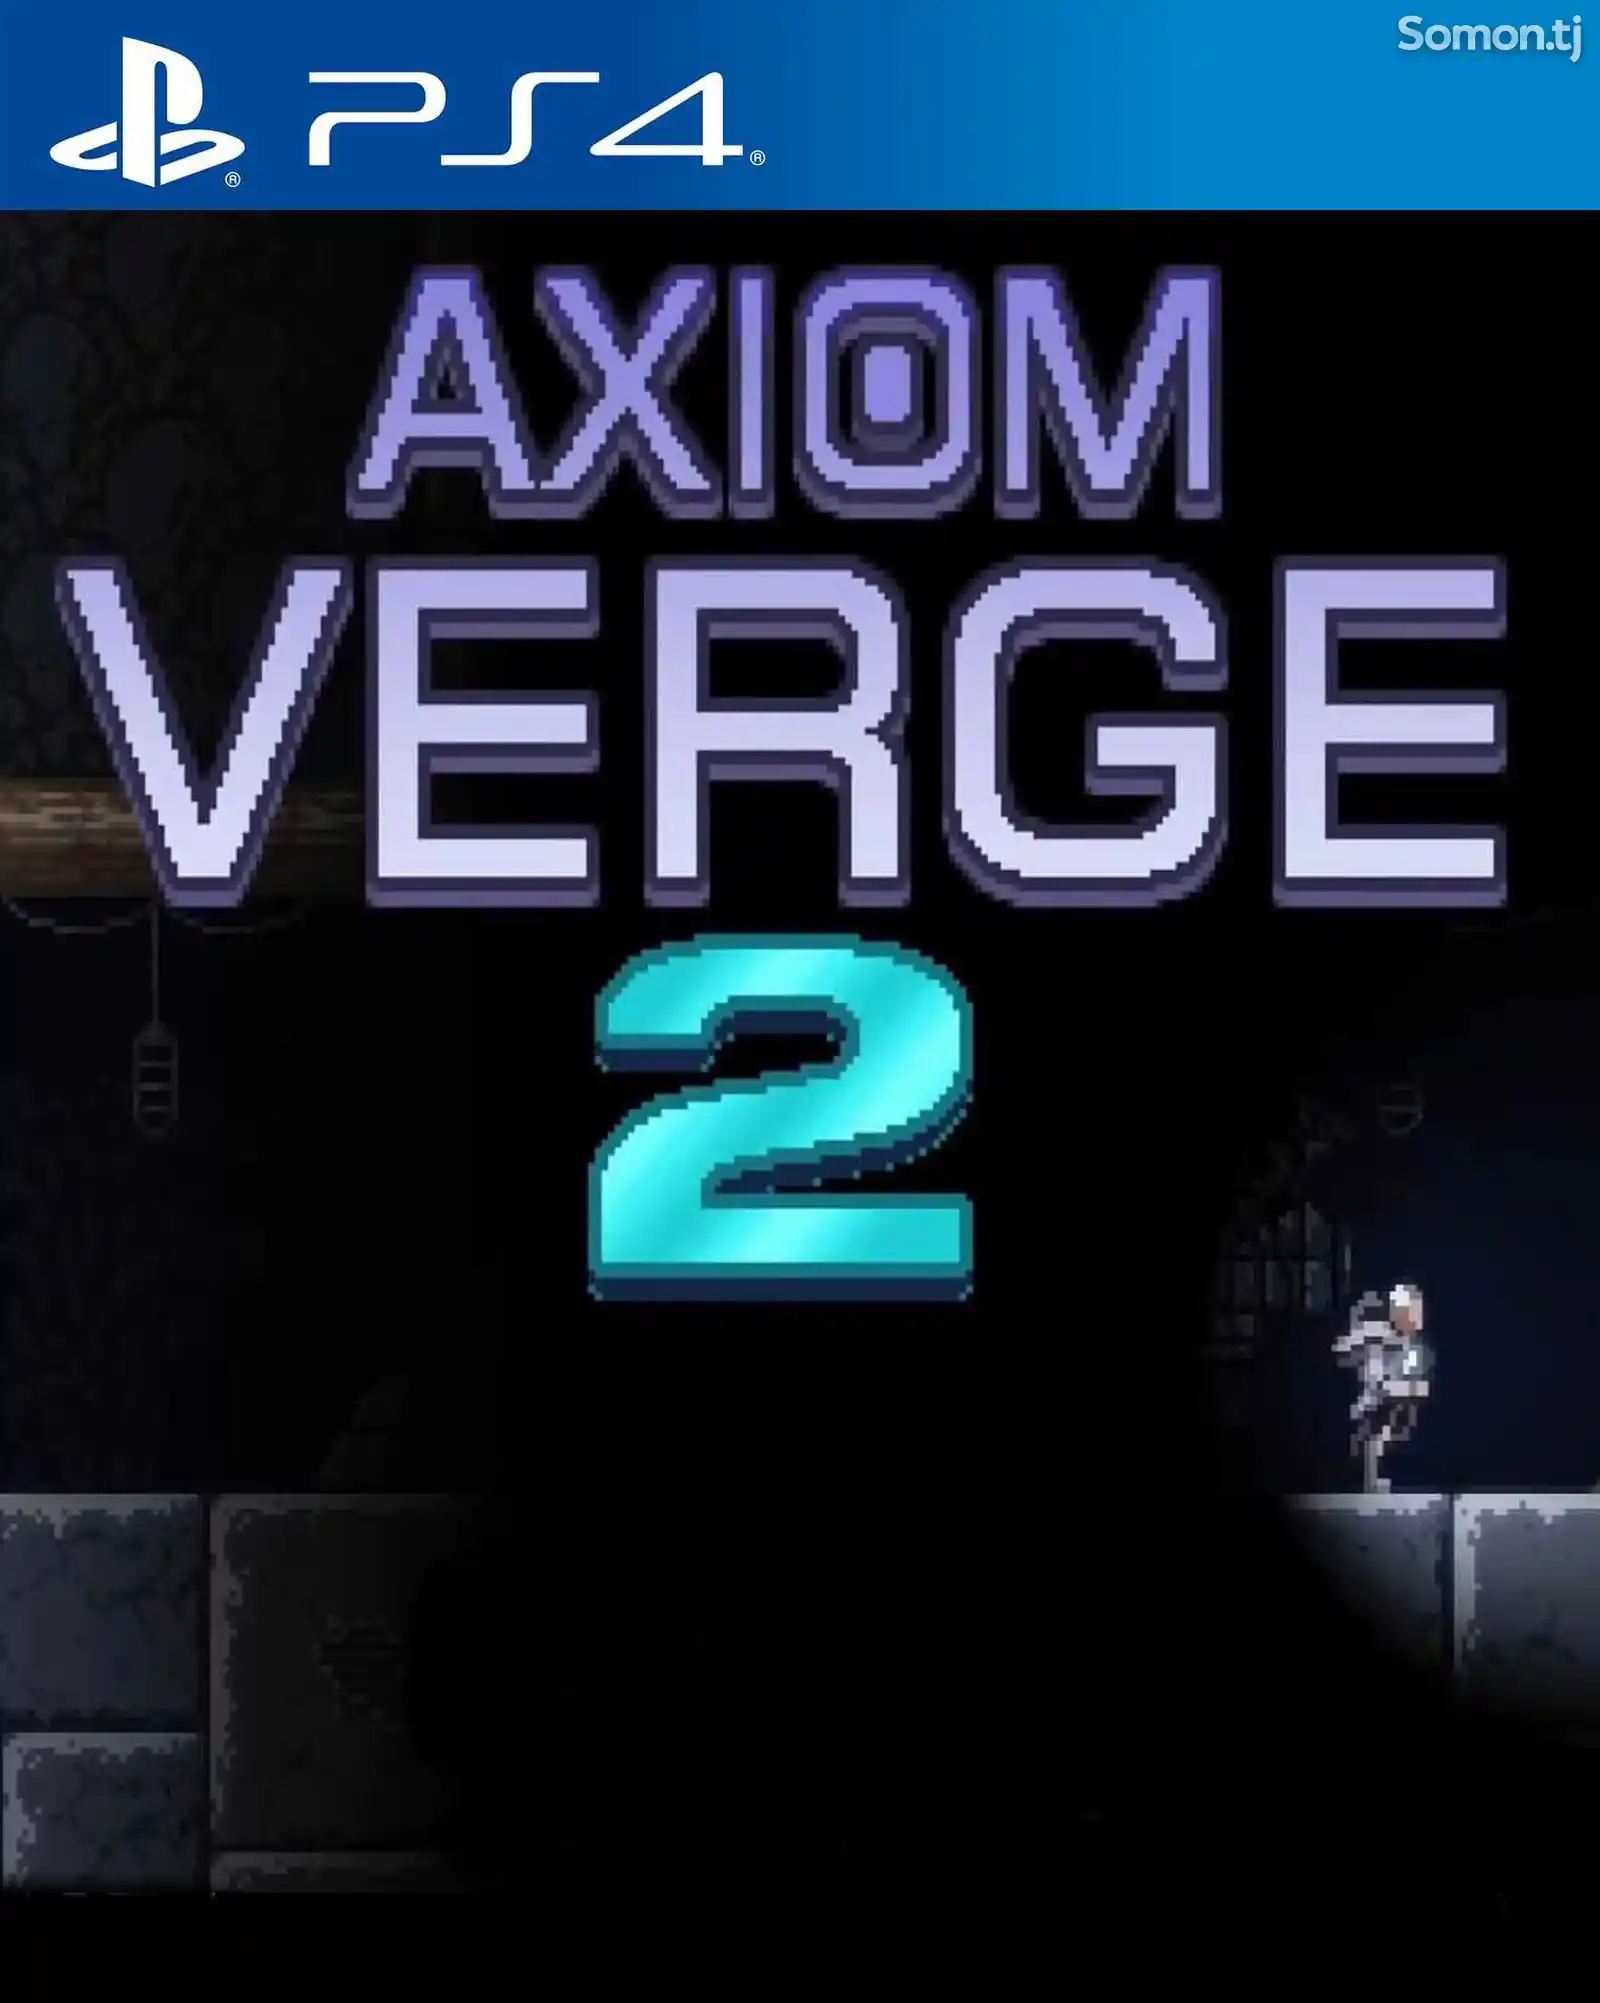 Игра Axiom verge 2 для PS-4 / 5.05 / 6.72 / 7.02 / 7.55 / 9.00 /-1